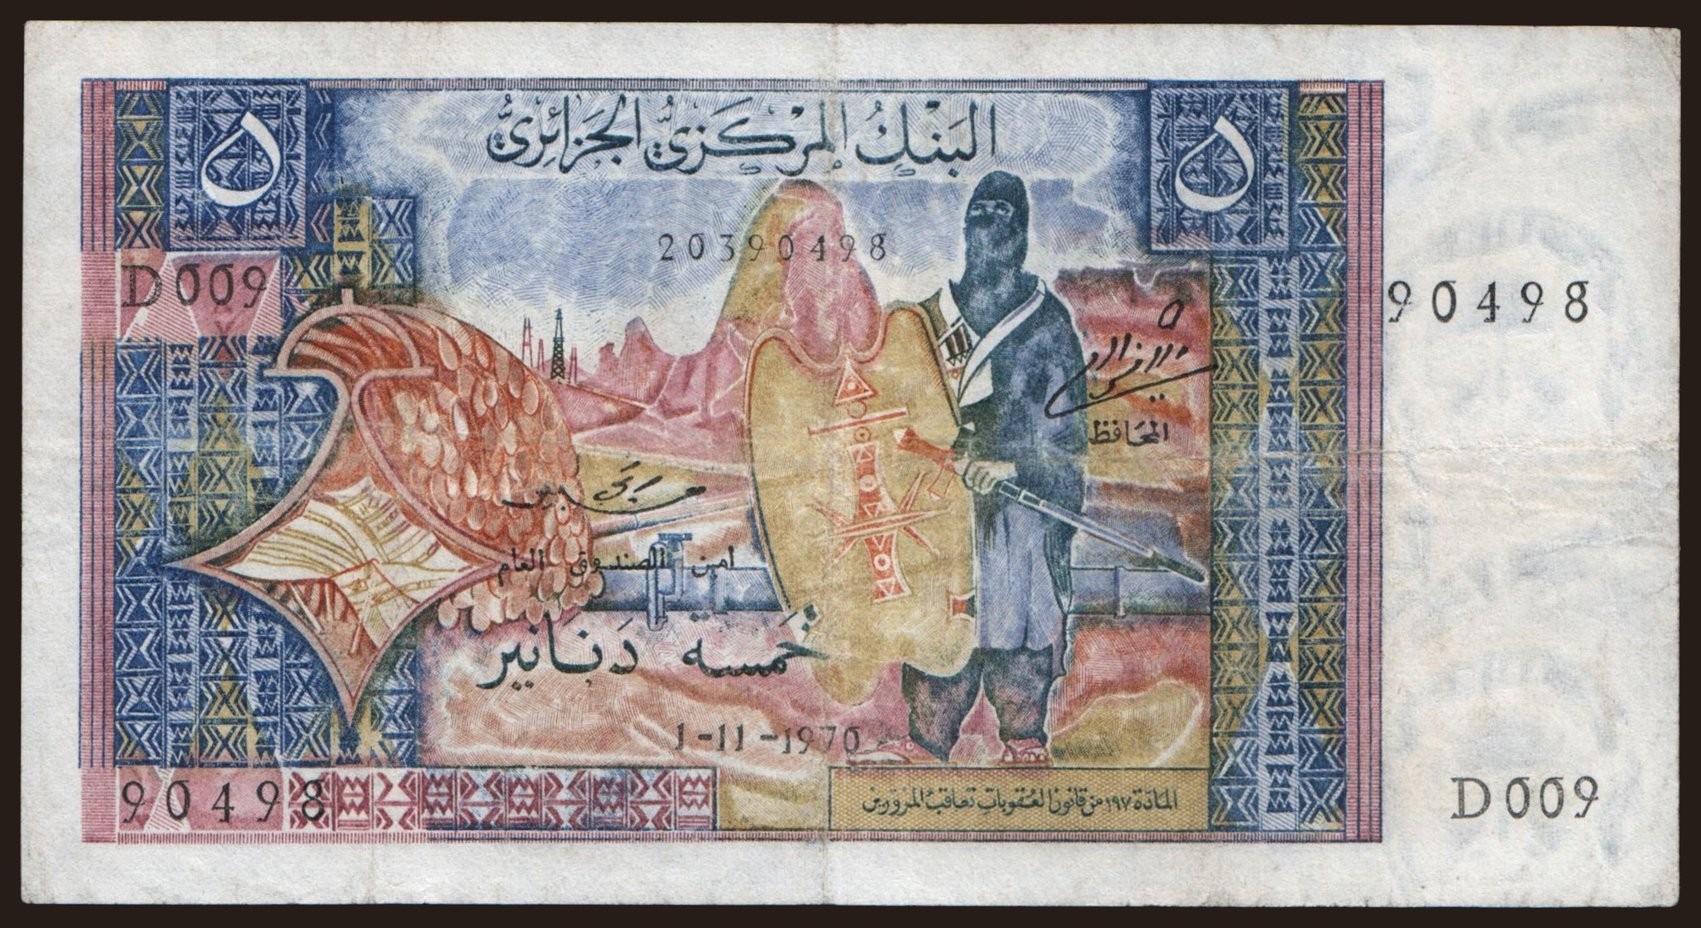 5 dinars, 1970